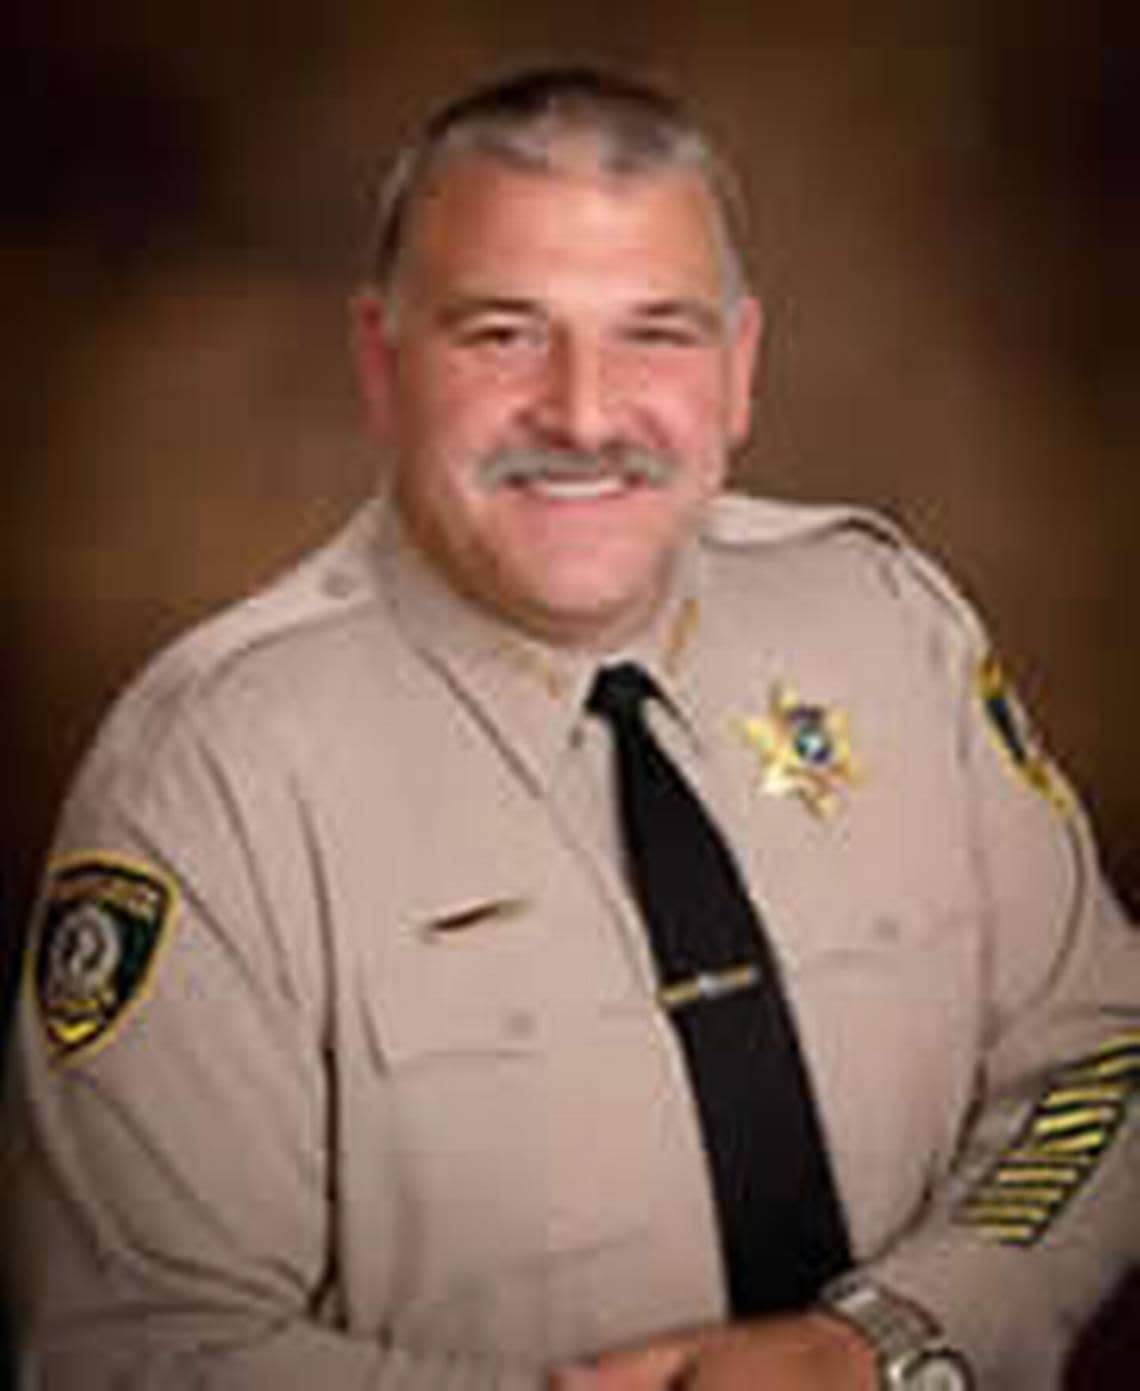 Sheriff Jim Raymond